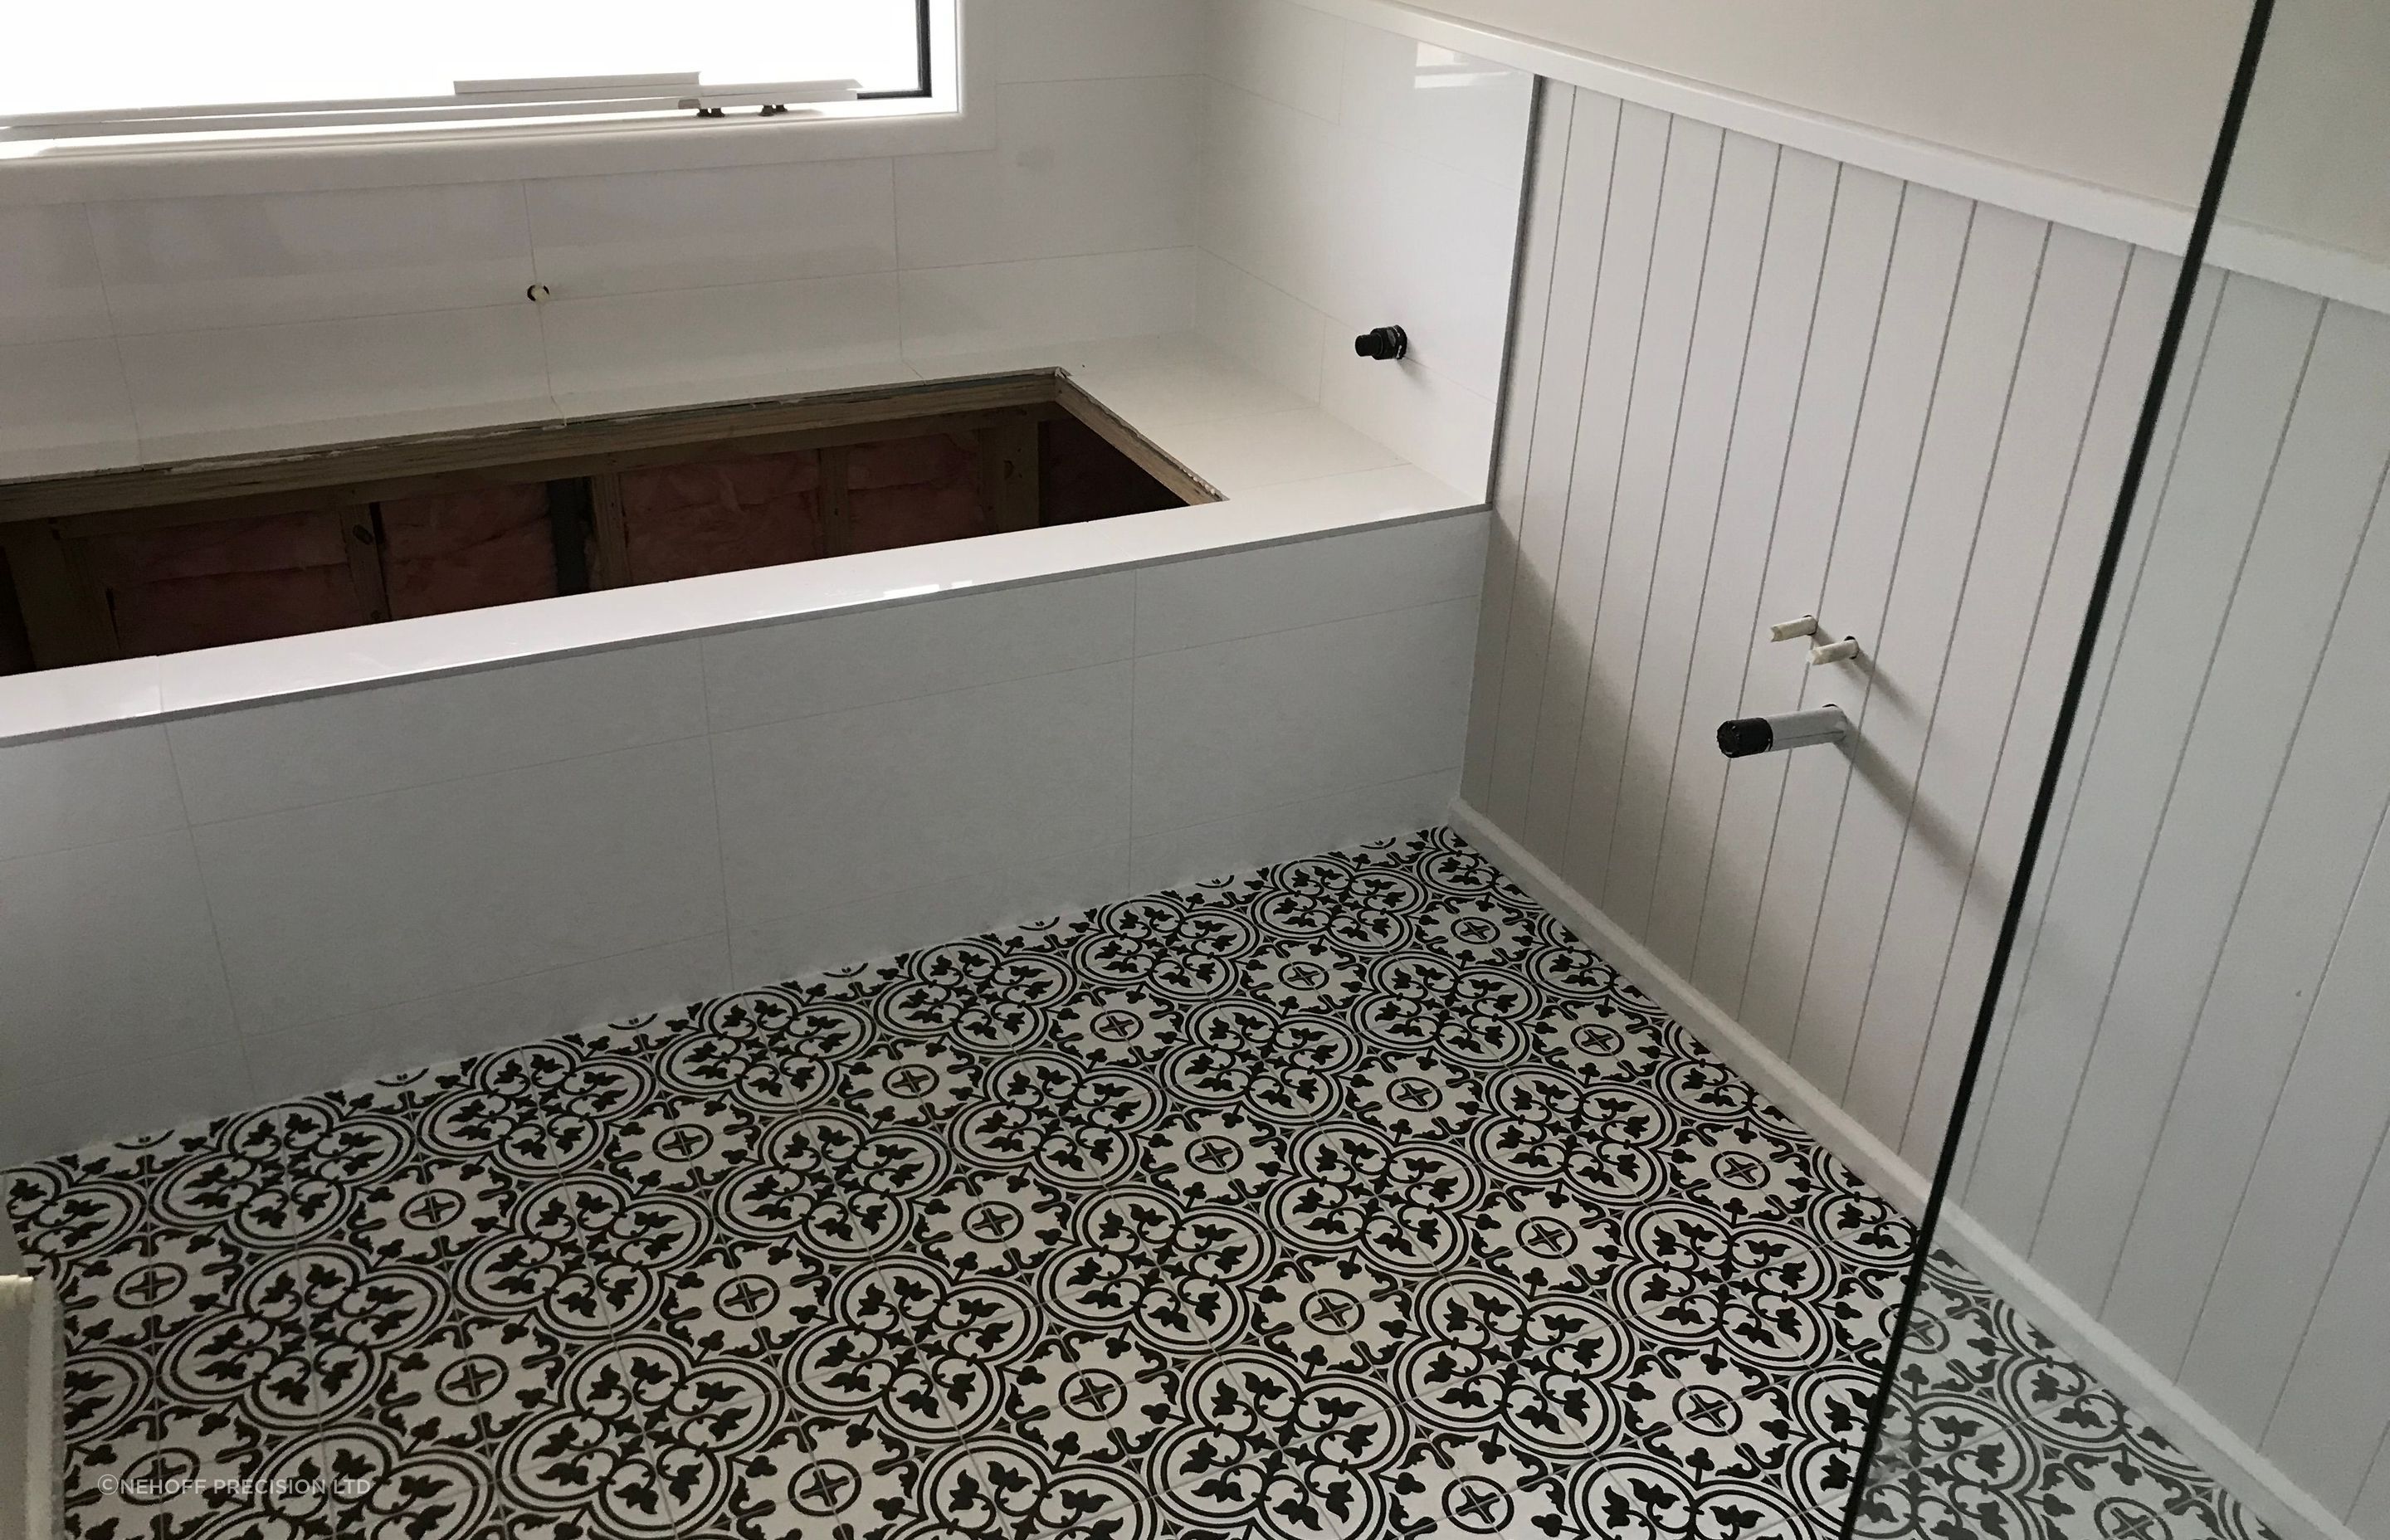 Tiled floor and bath cradle.